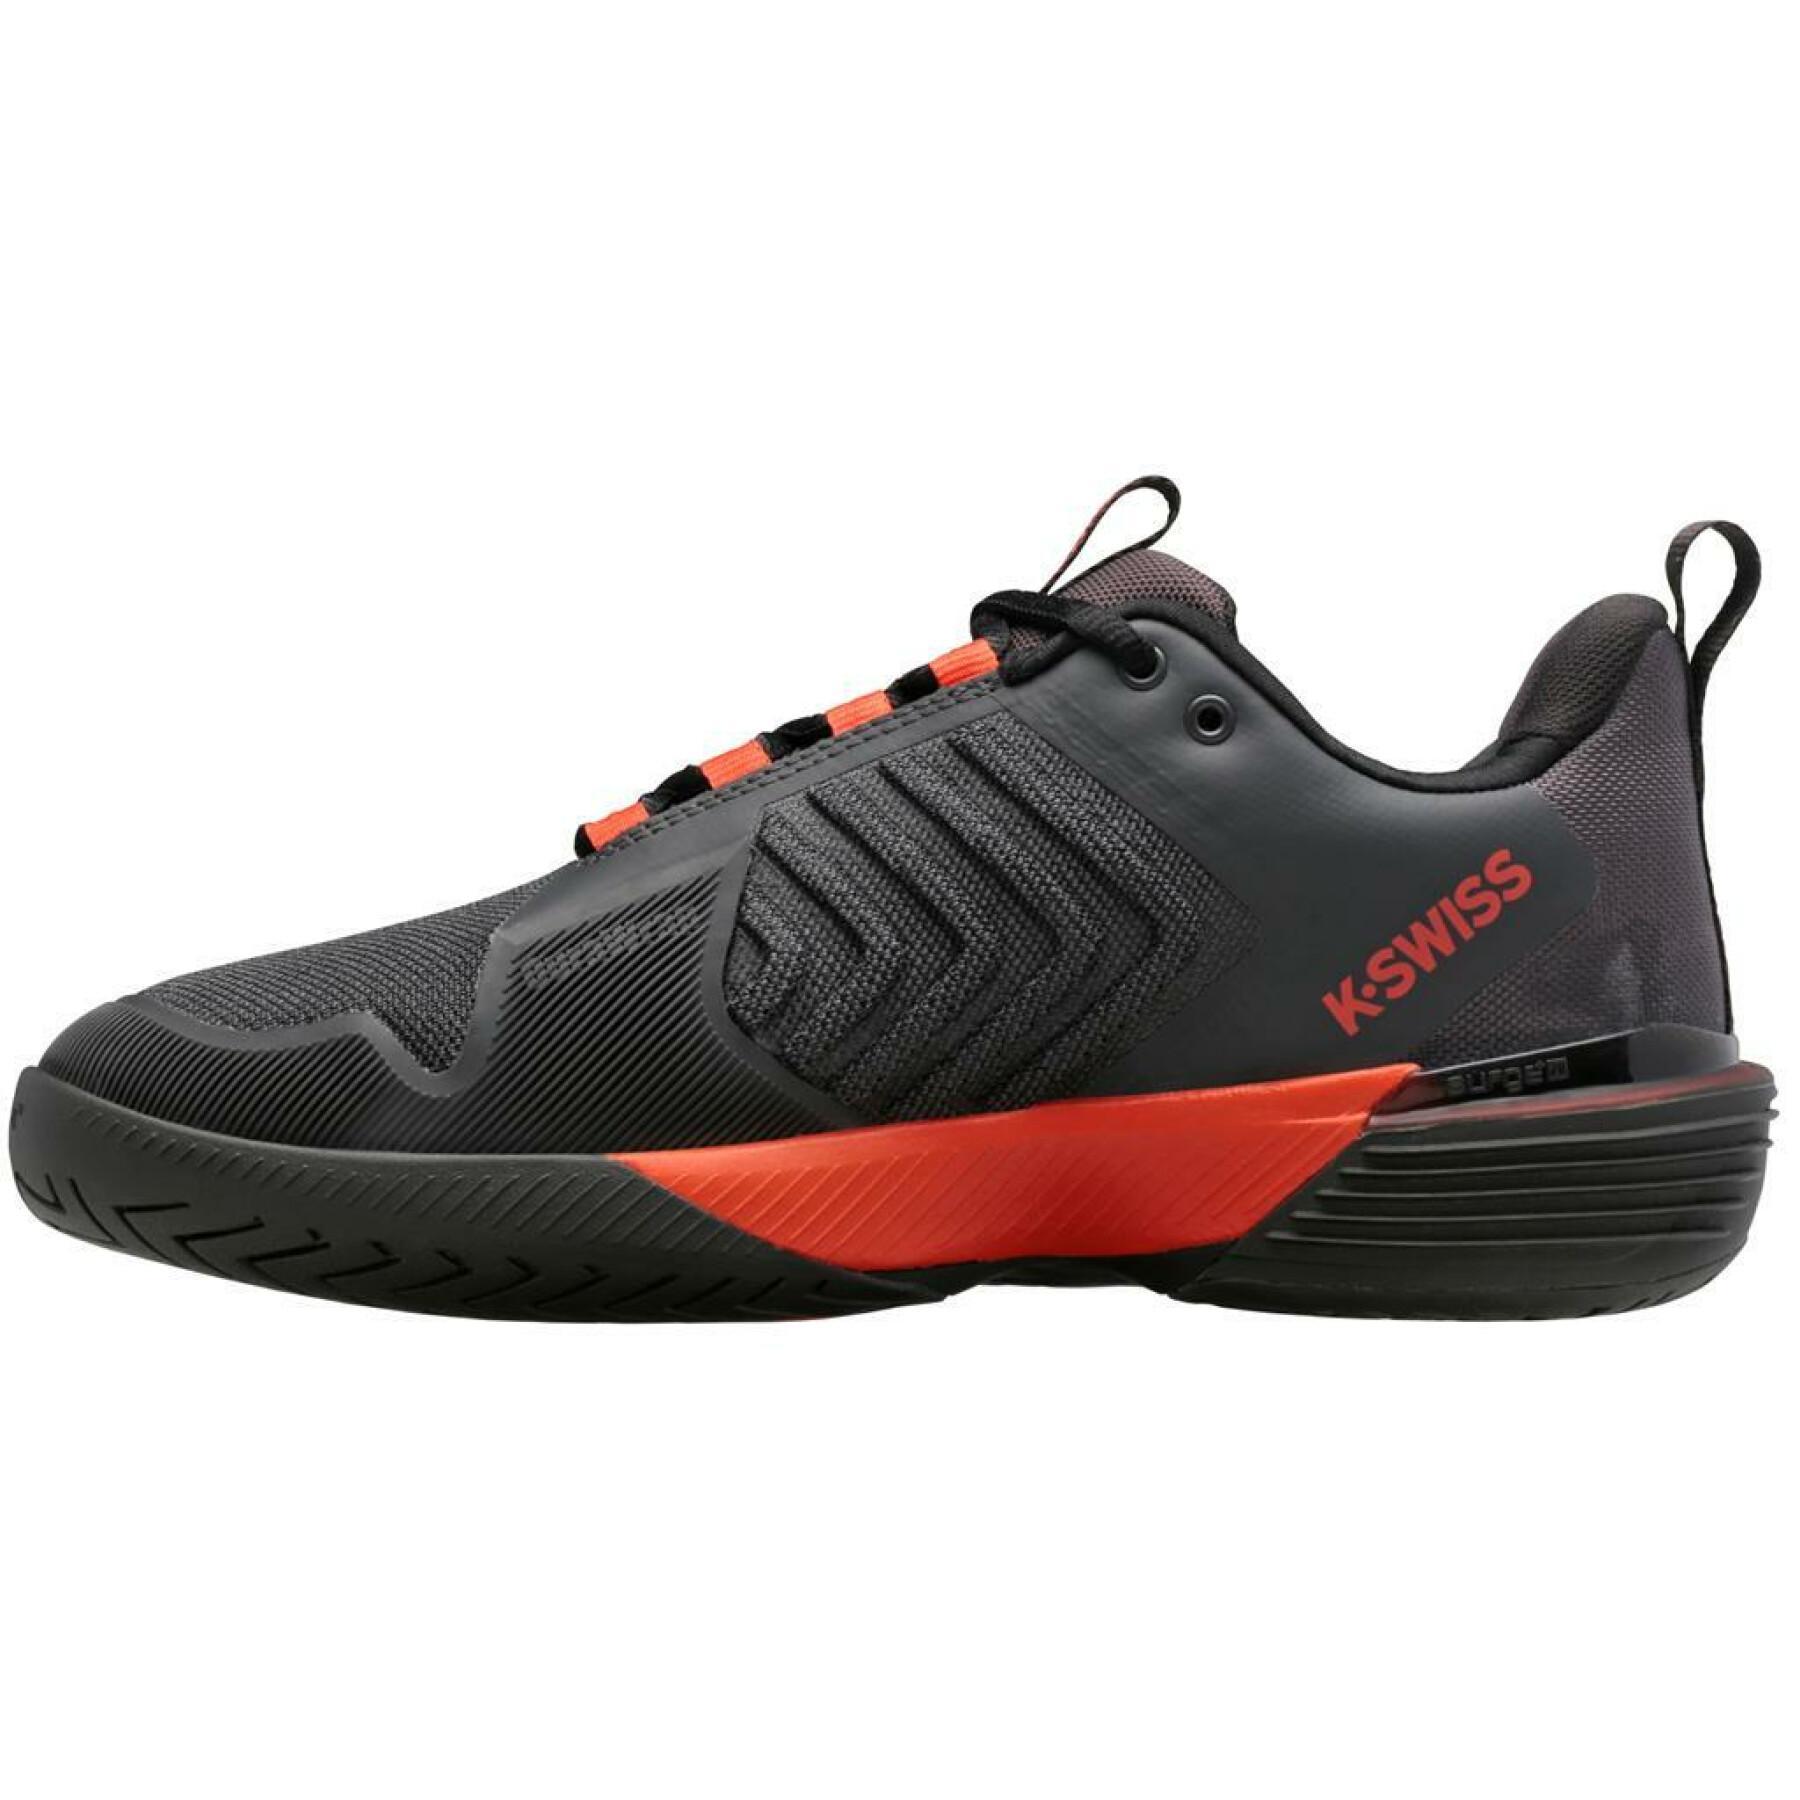 Tennis shoes K-Swiss Ultrashot 3